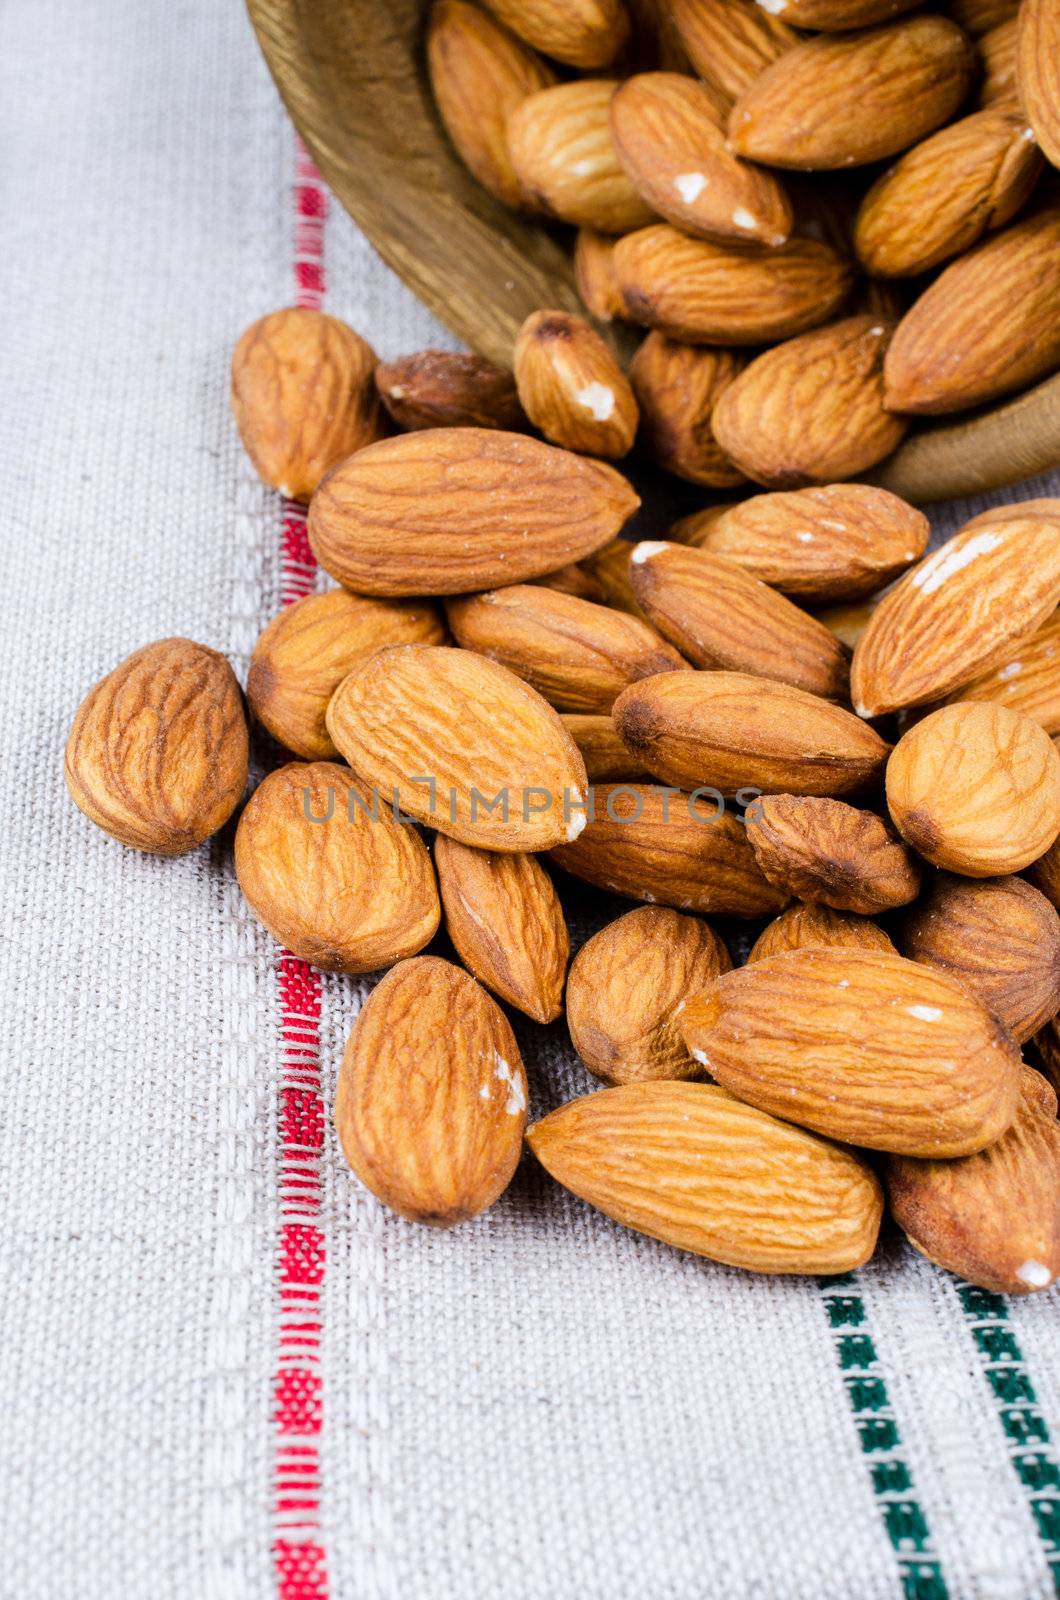 Almonds on a cloth by Nanisimova